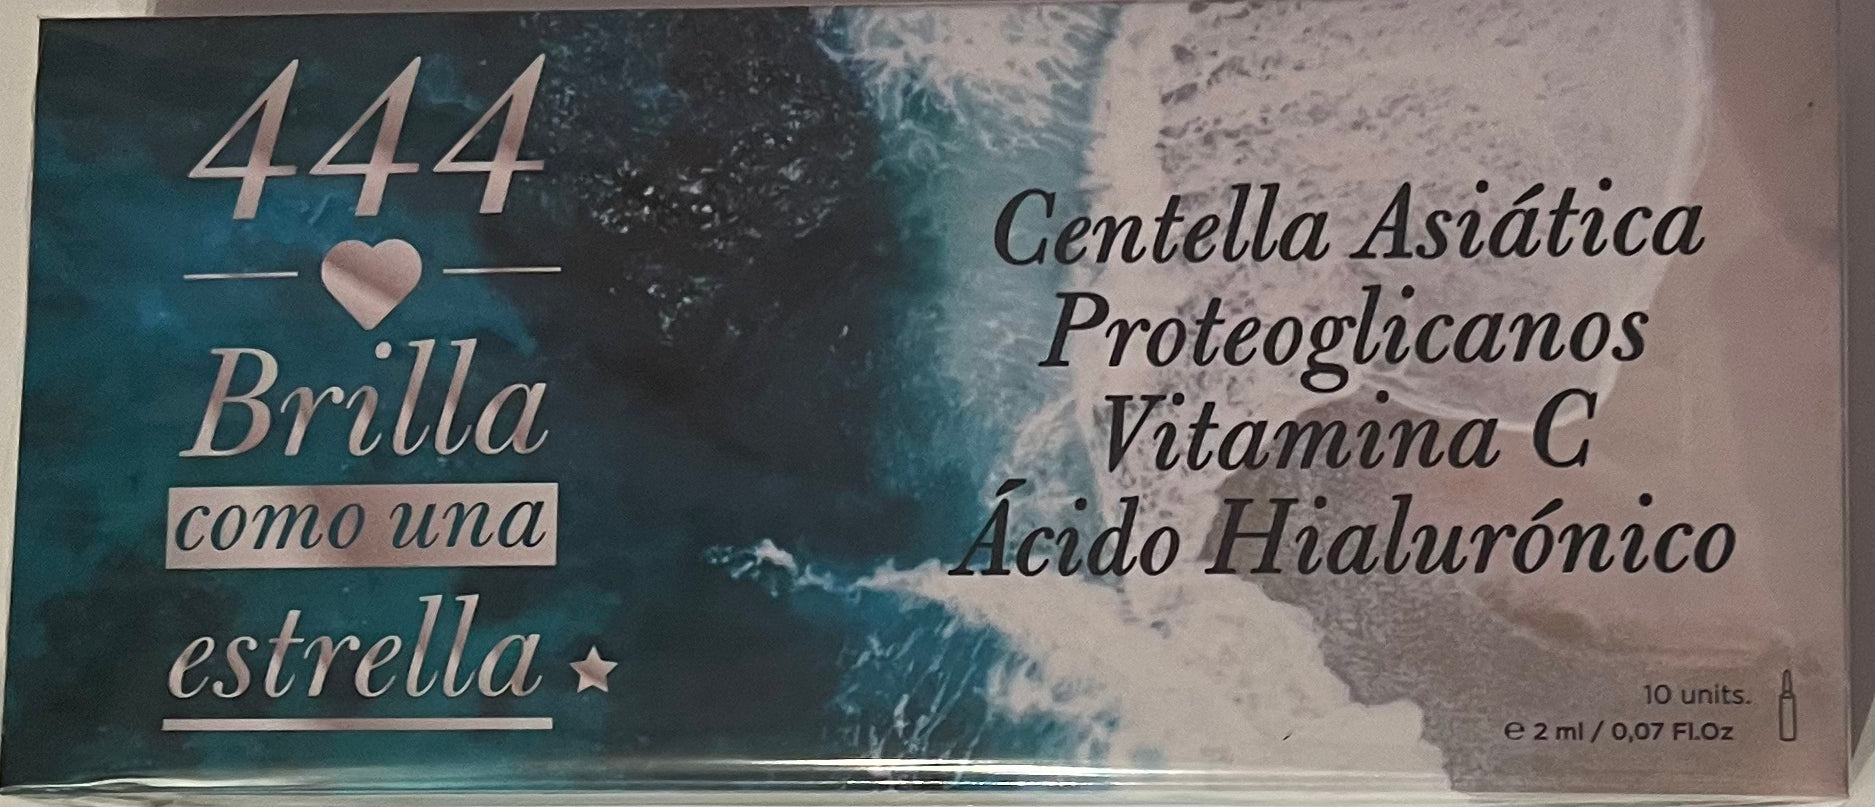 444 ampollas con proteoglicanos centella asiatica vitamina c y acido hialunonico OFERTA 2 cajas